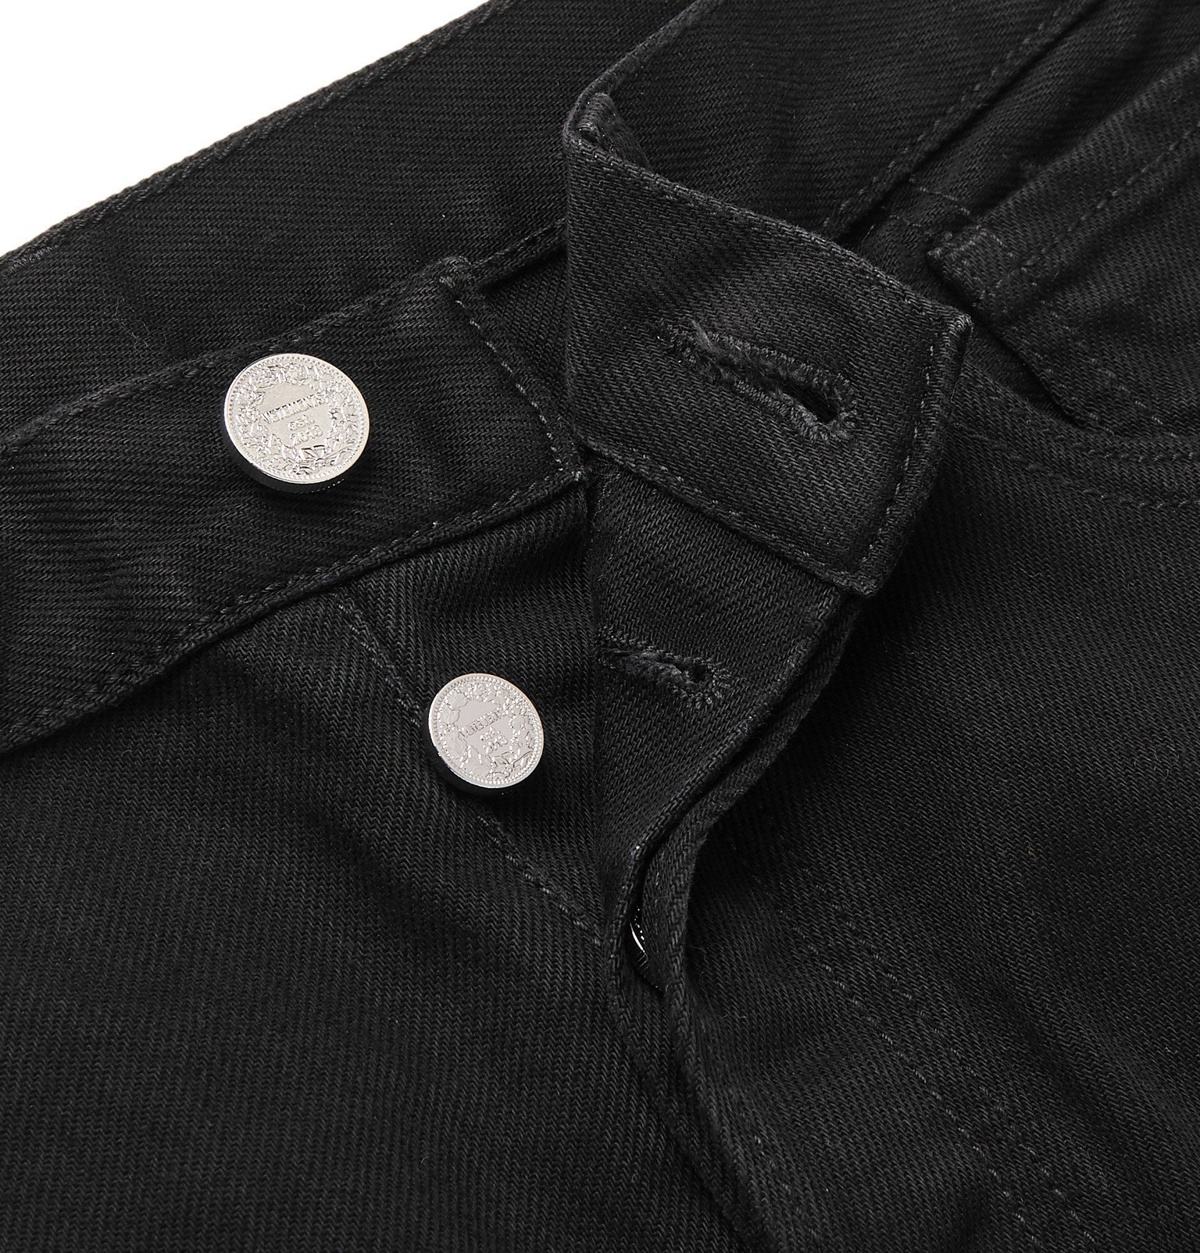 Vetements - Distressed Denim Jeans - Black Vetements